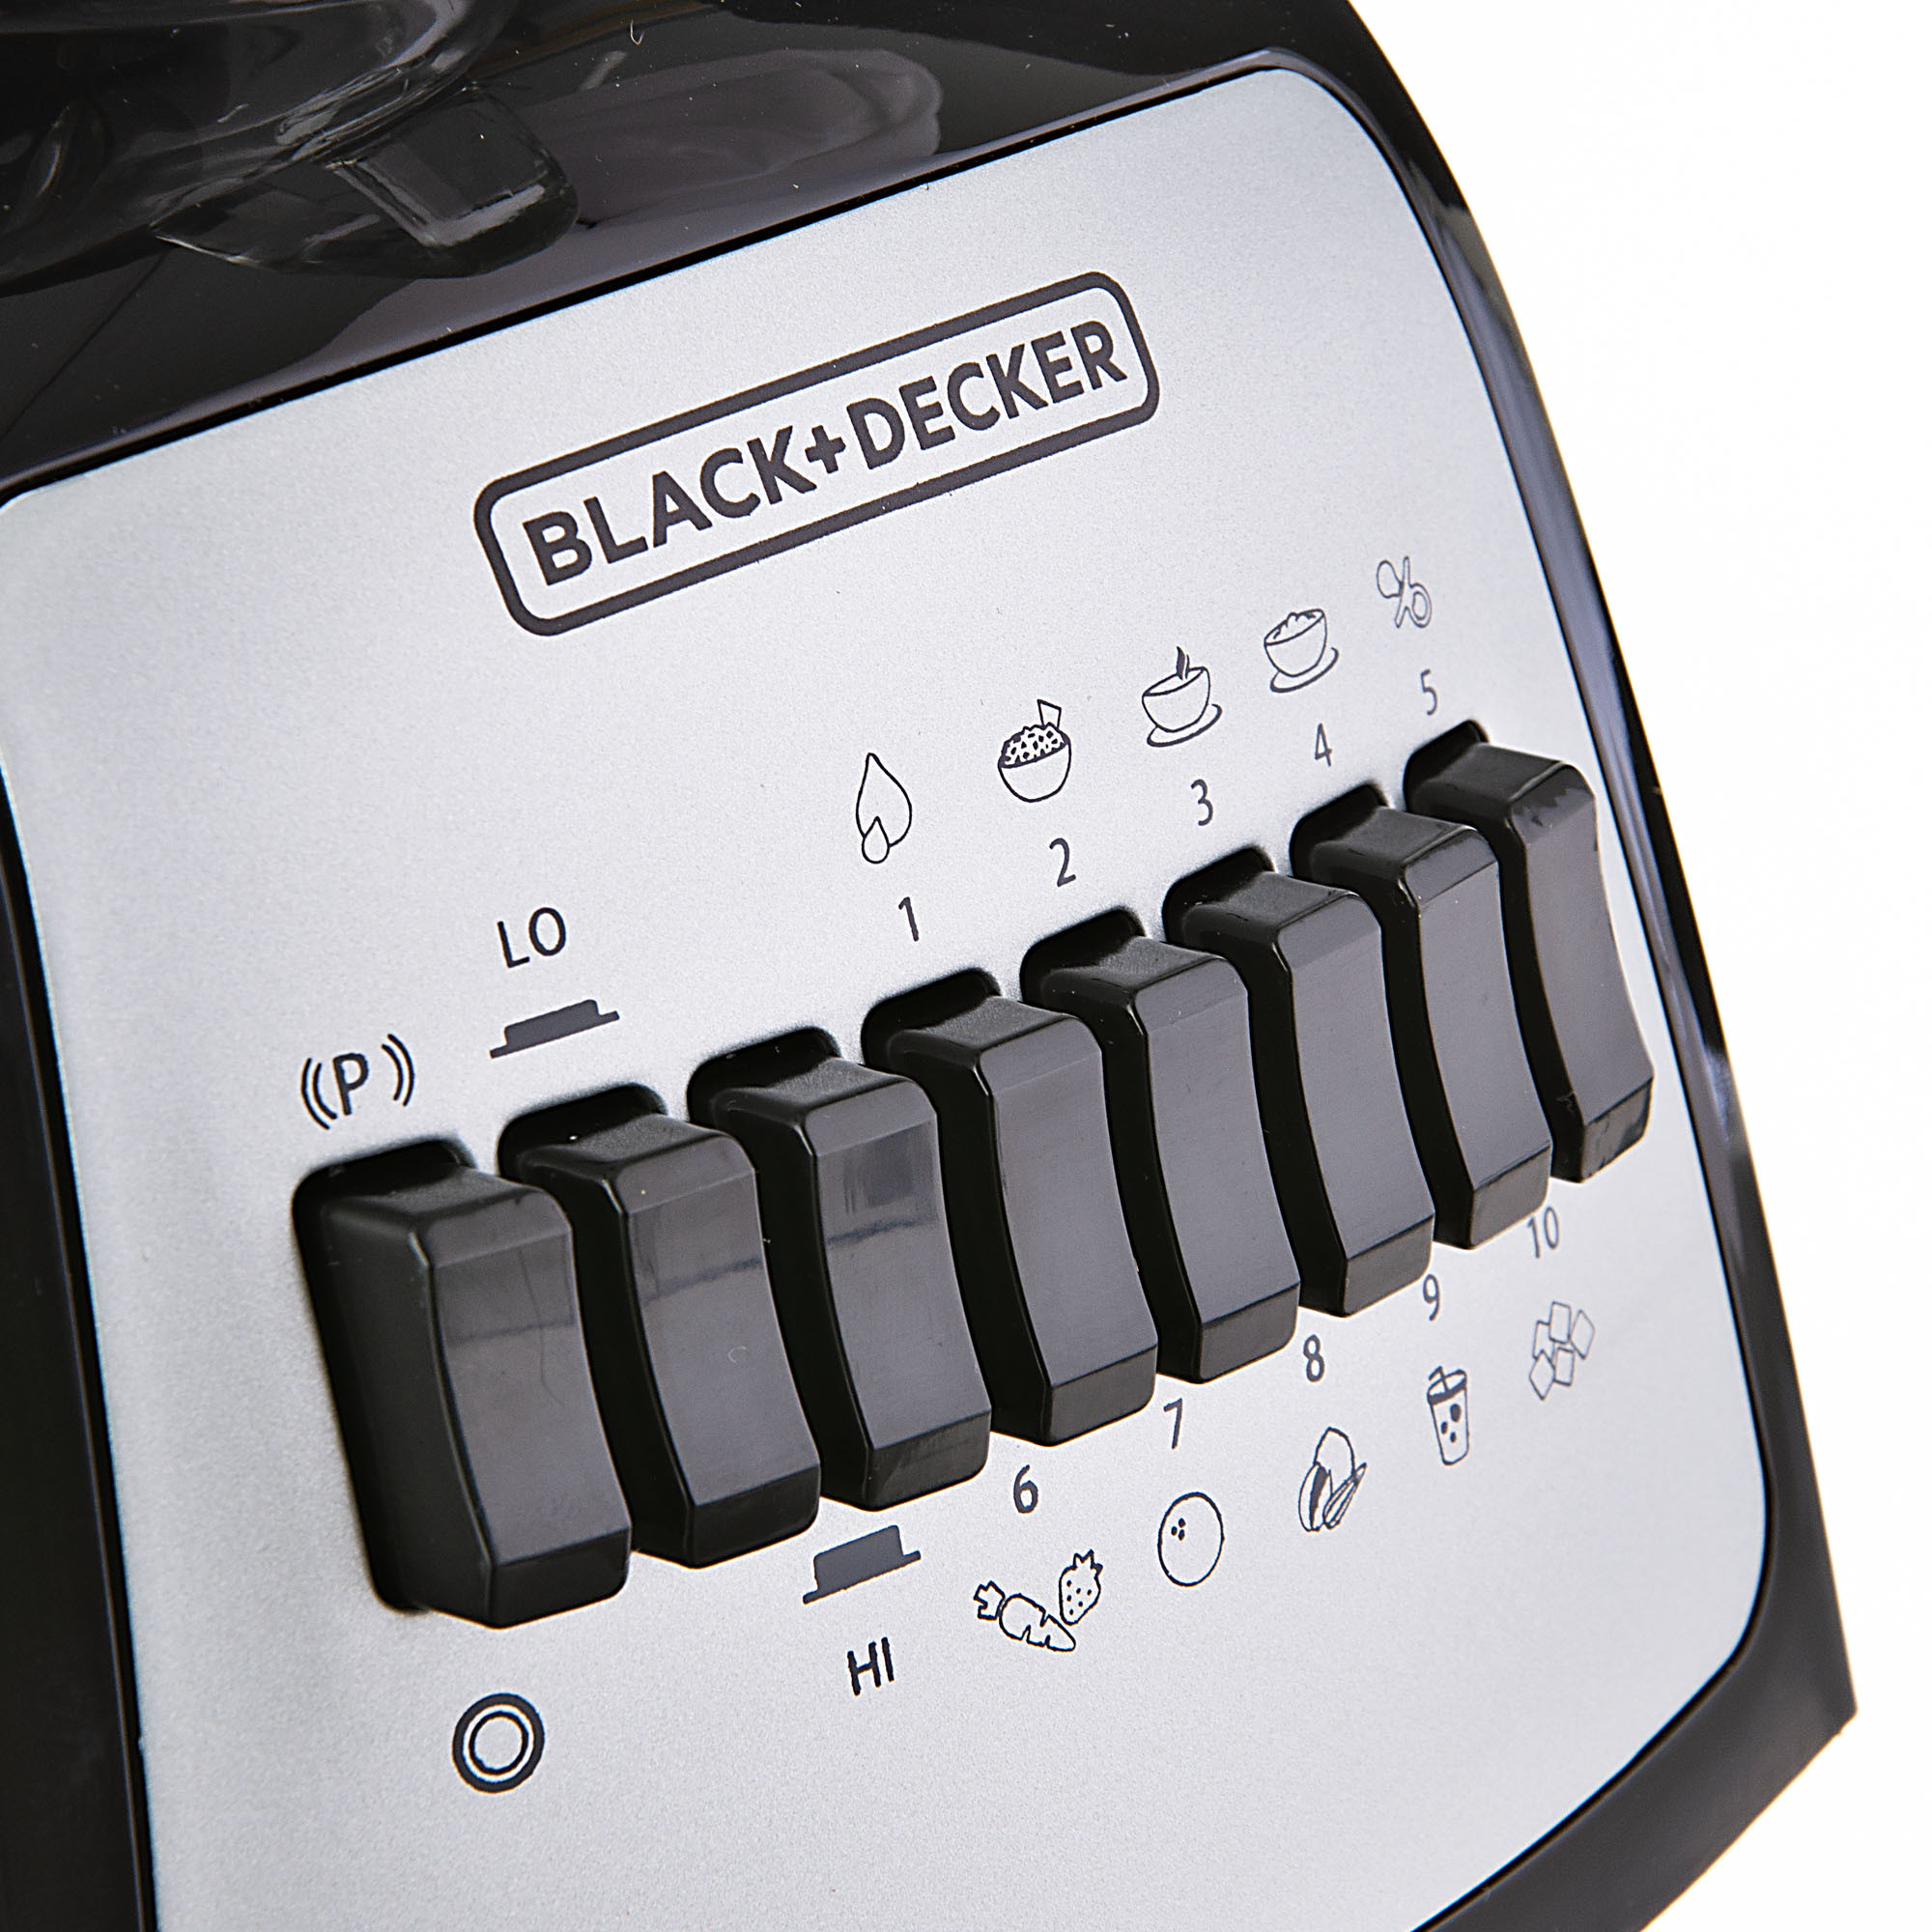 Licuadora Black + Decker Jarra de Vidrio 550 Watts 10 Velocidades BLBD210G